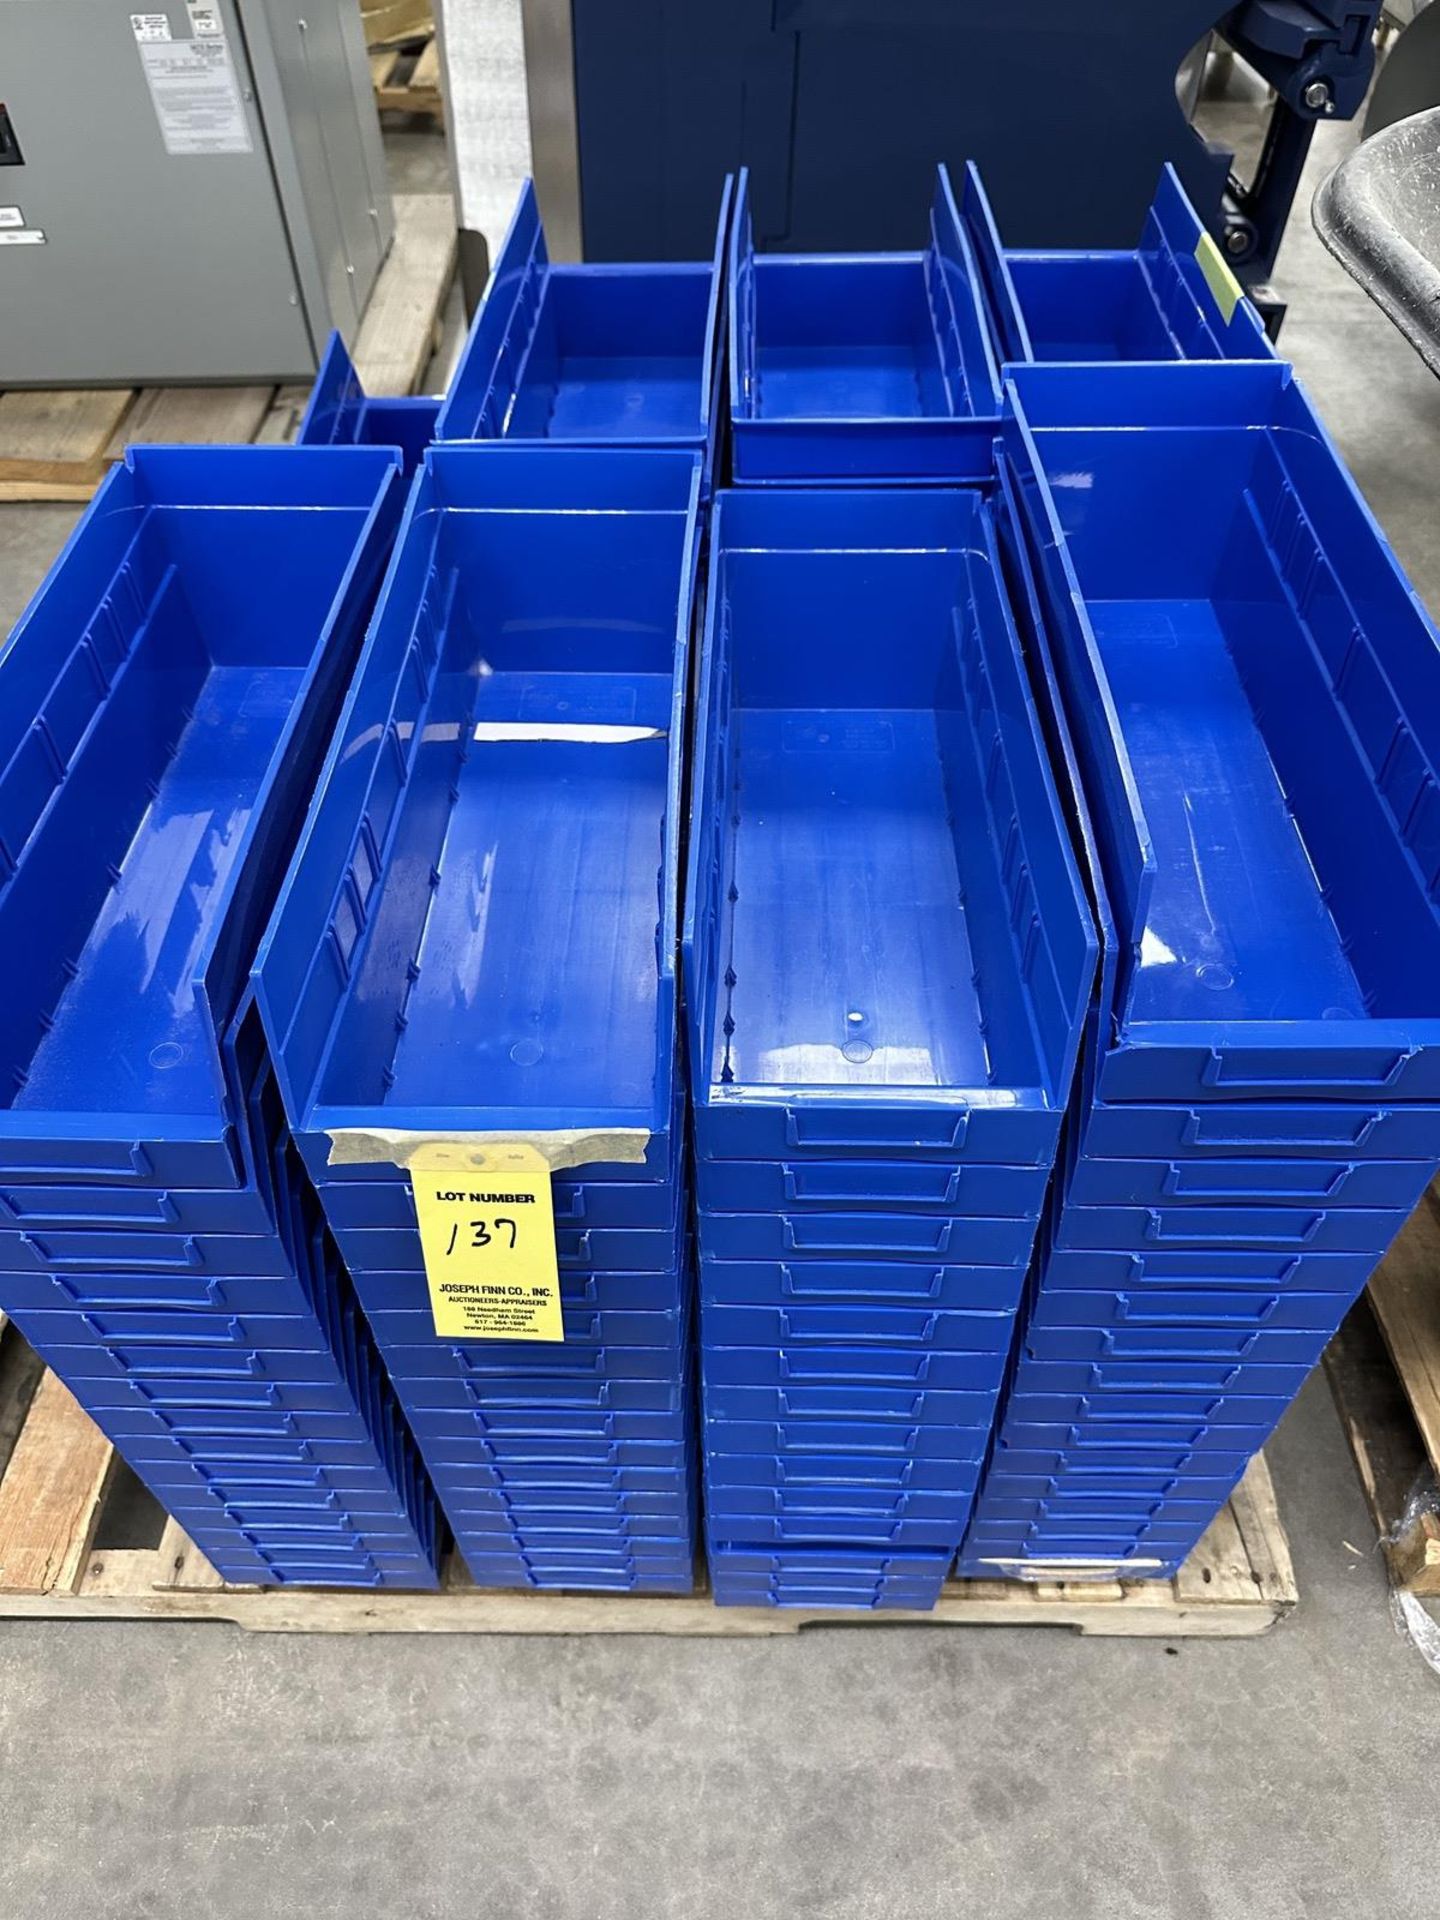 LOT (115) Stacking Blue Storage Bins | Rig Fee $50 - Image 2 of 2